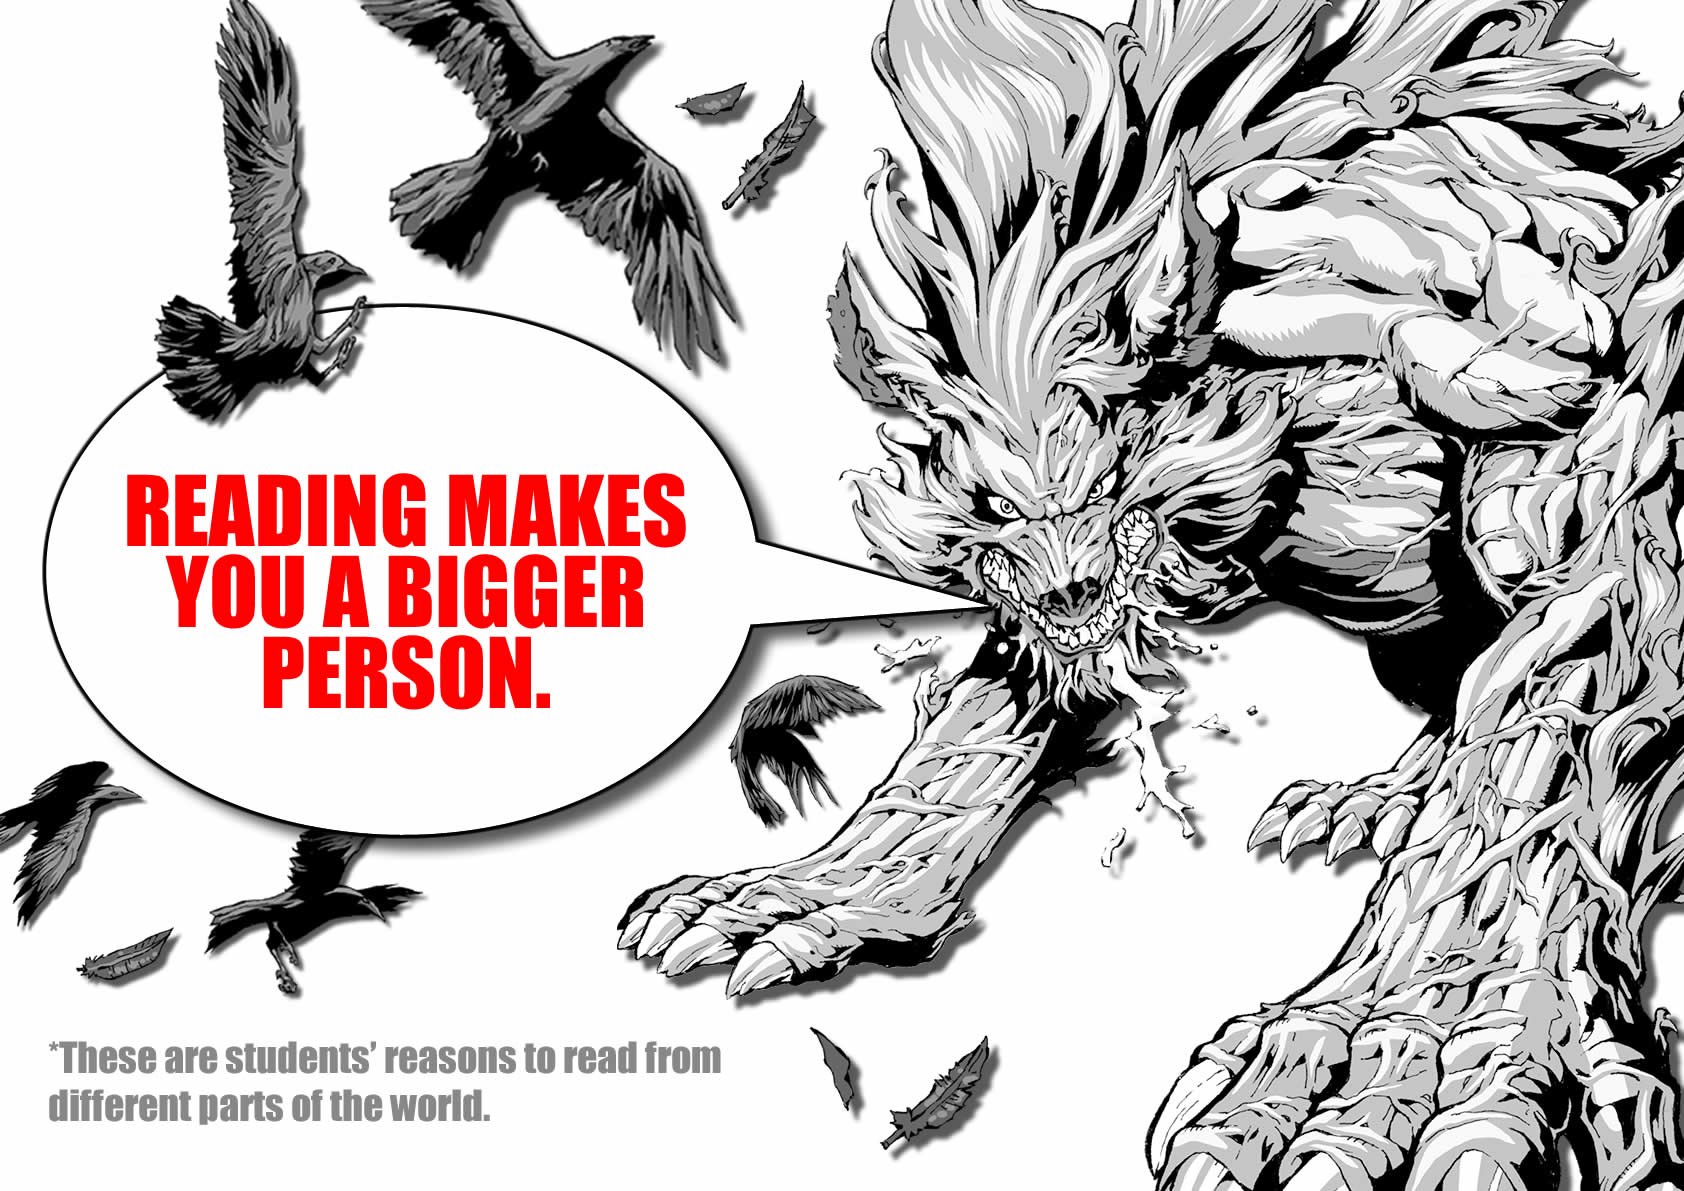 #ReasonsToRead - Reading makes you a bigger person.